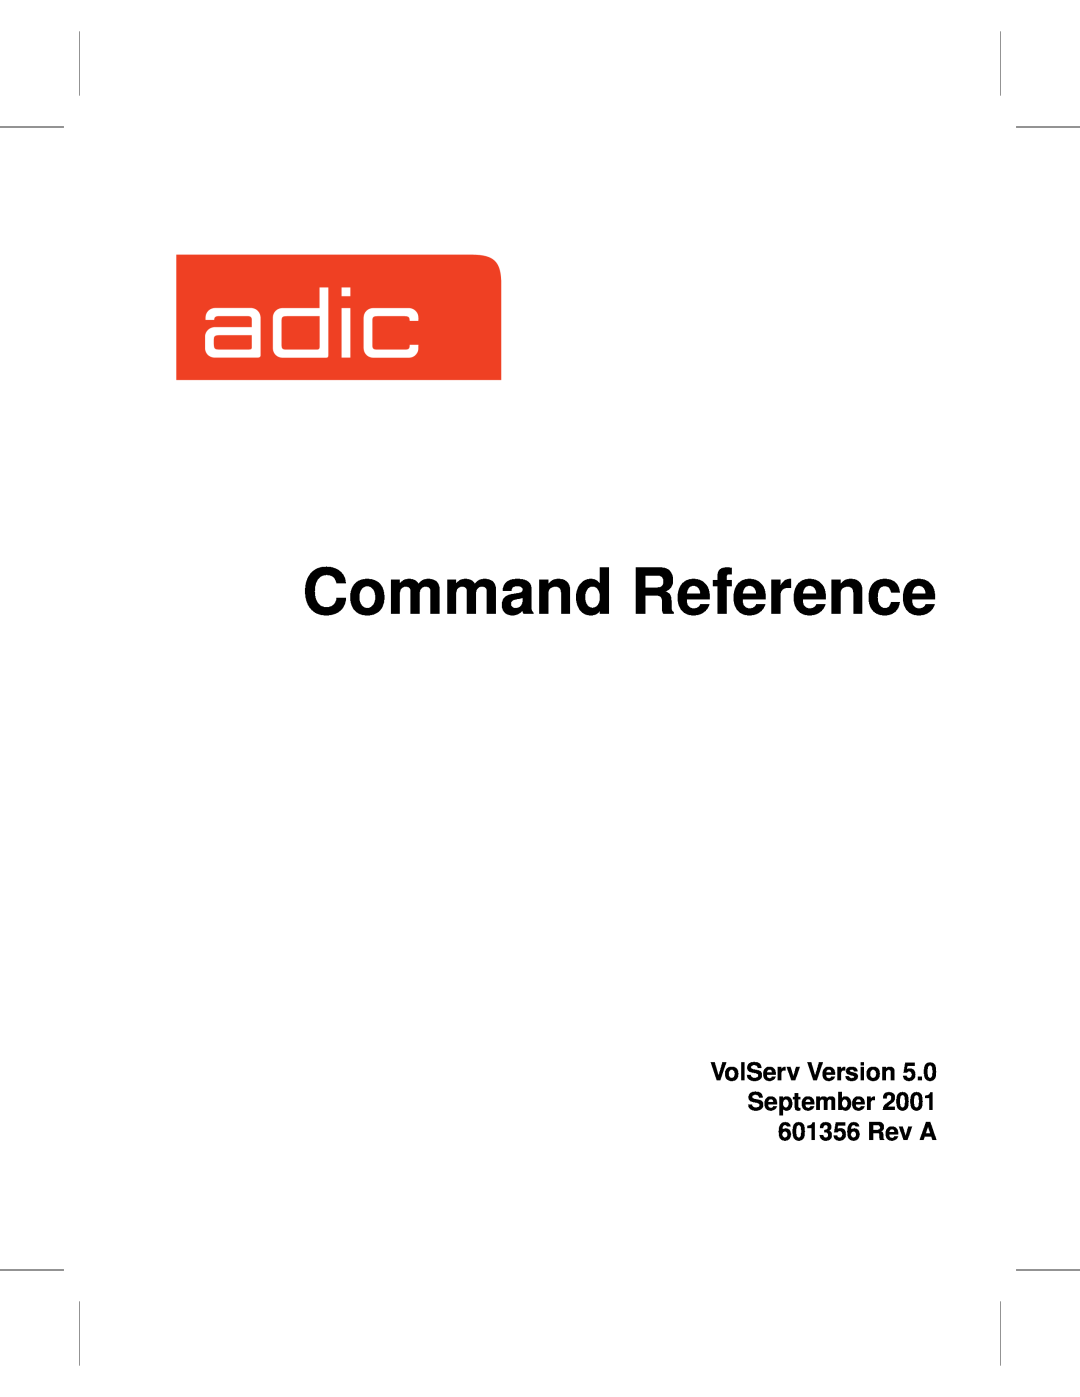 ADIC manual VolServ Version September 601356 Rev A, Command Reference 